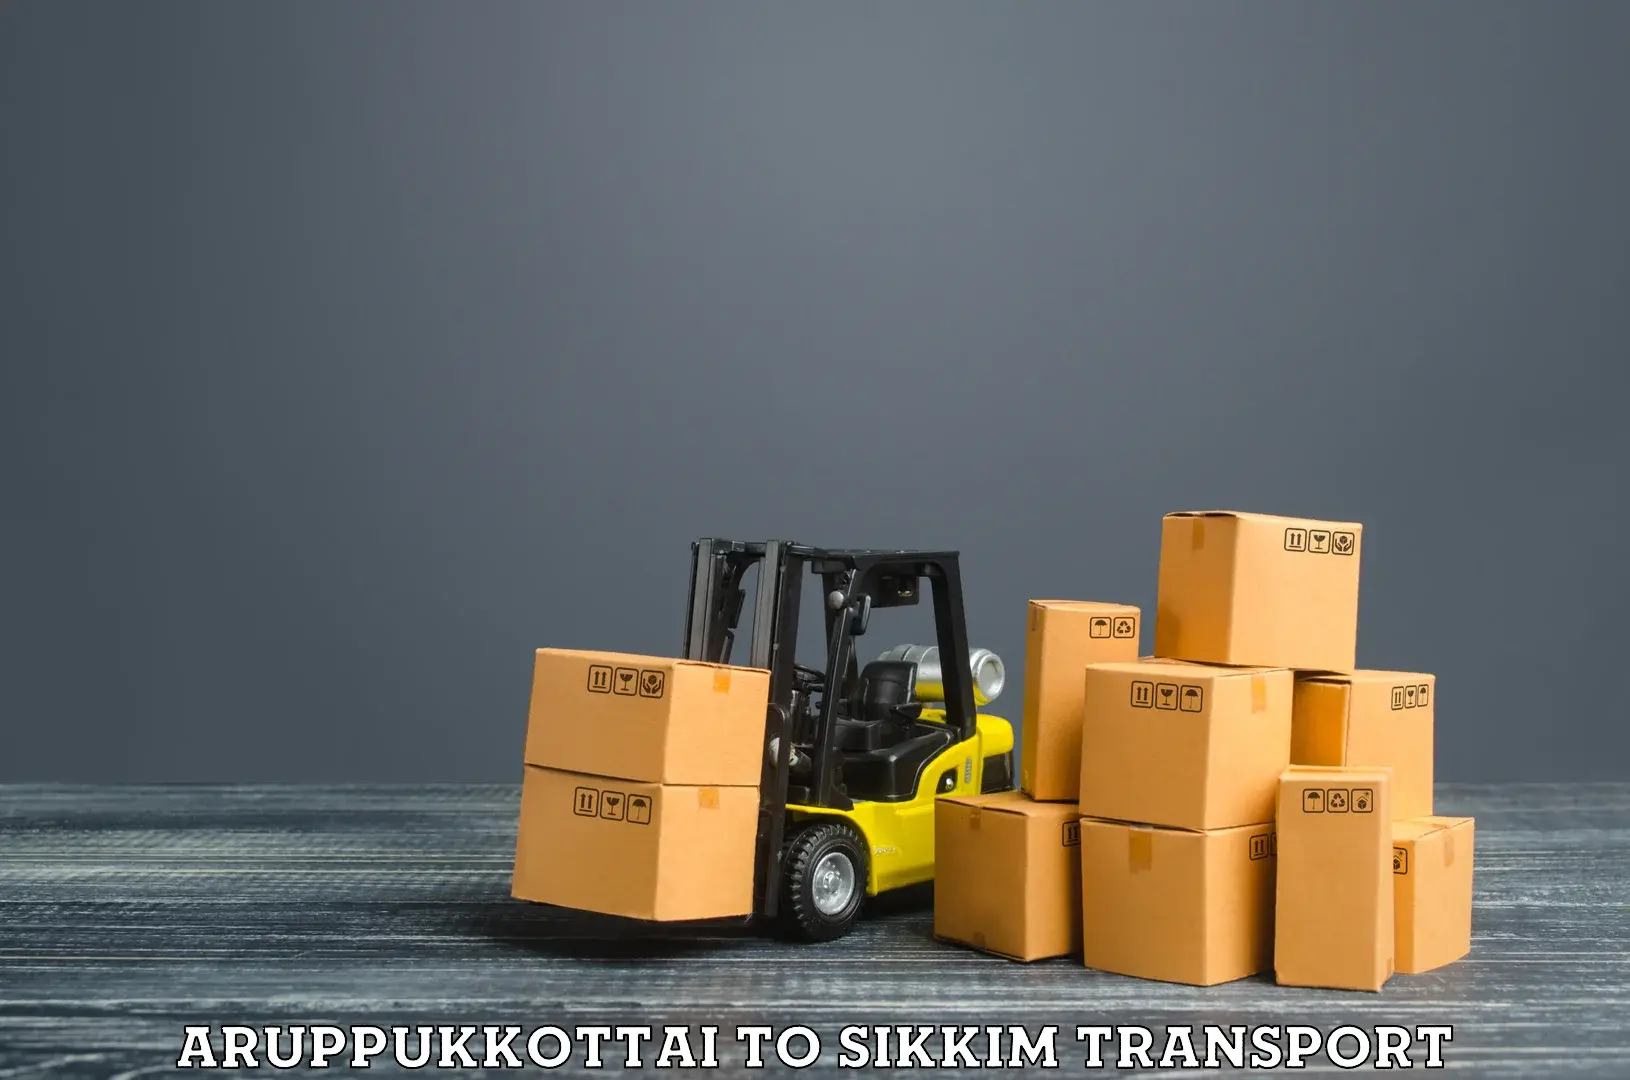 Delivery service Aruppukkottai to Mangan